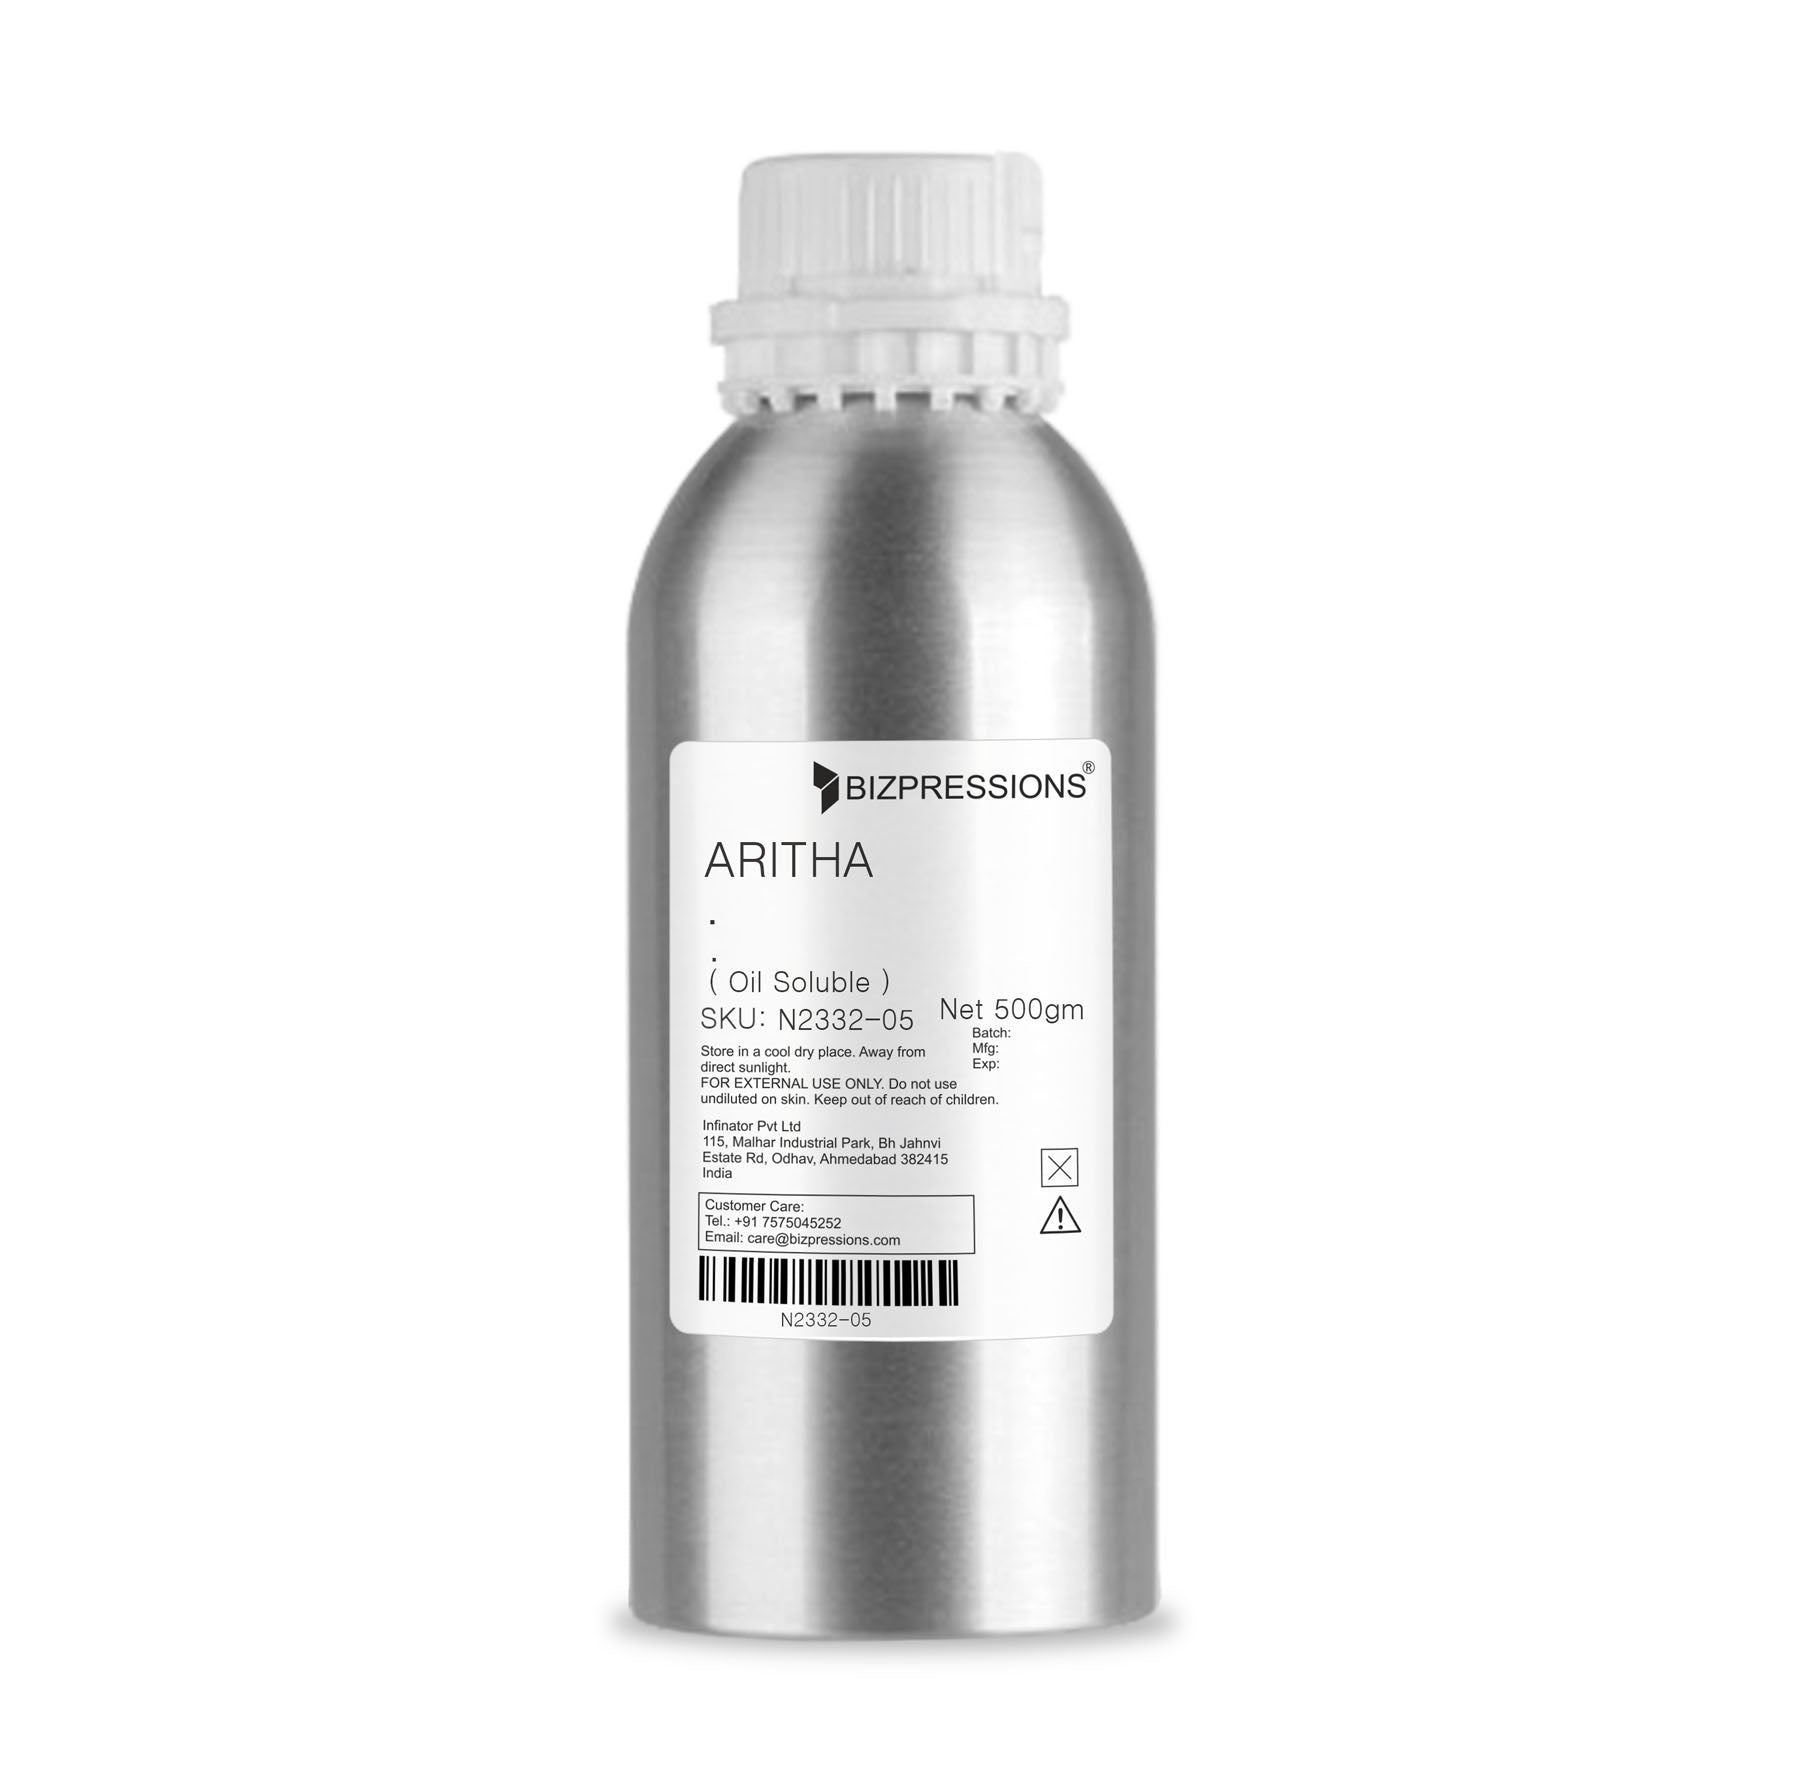 ARITHA - Fragrance ( Oil Soluble ) - 500 gm